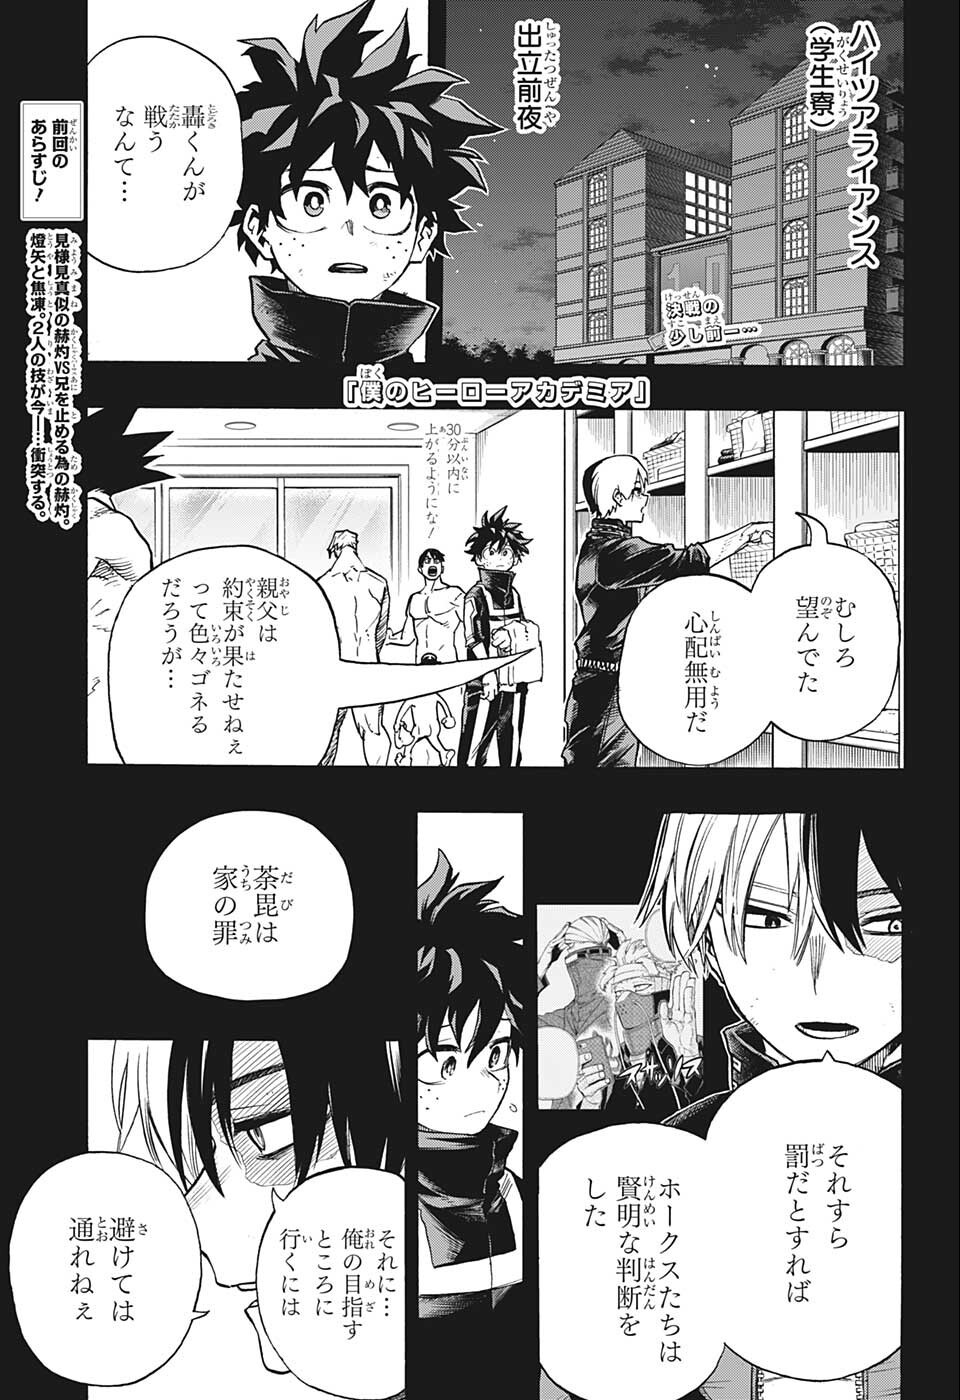 Boku no Hero Academia - Chapter 352 - Page 1